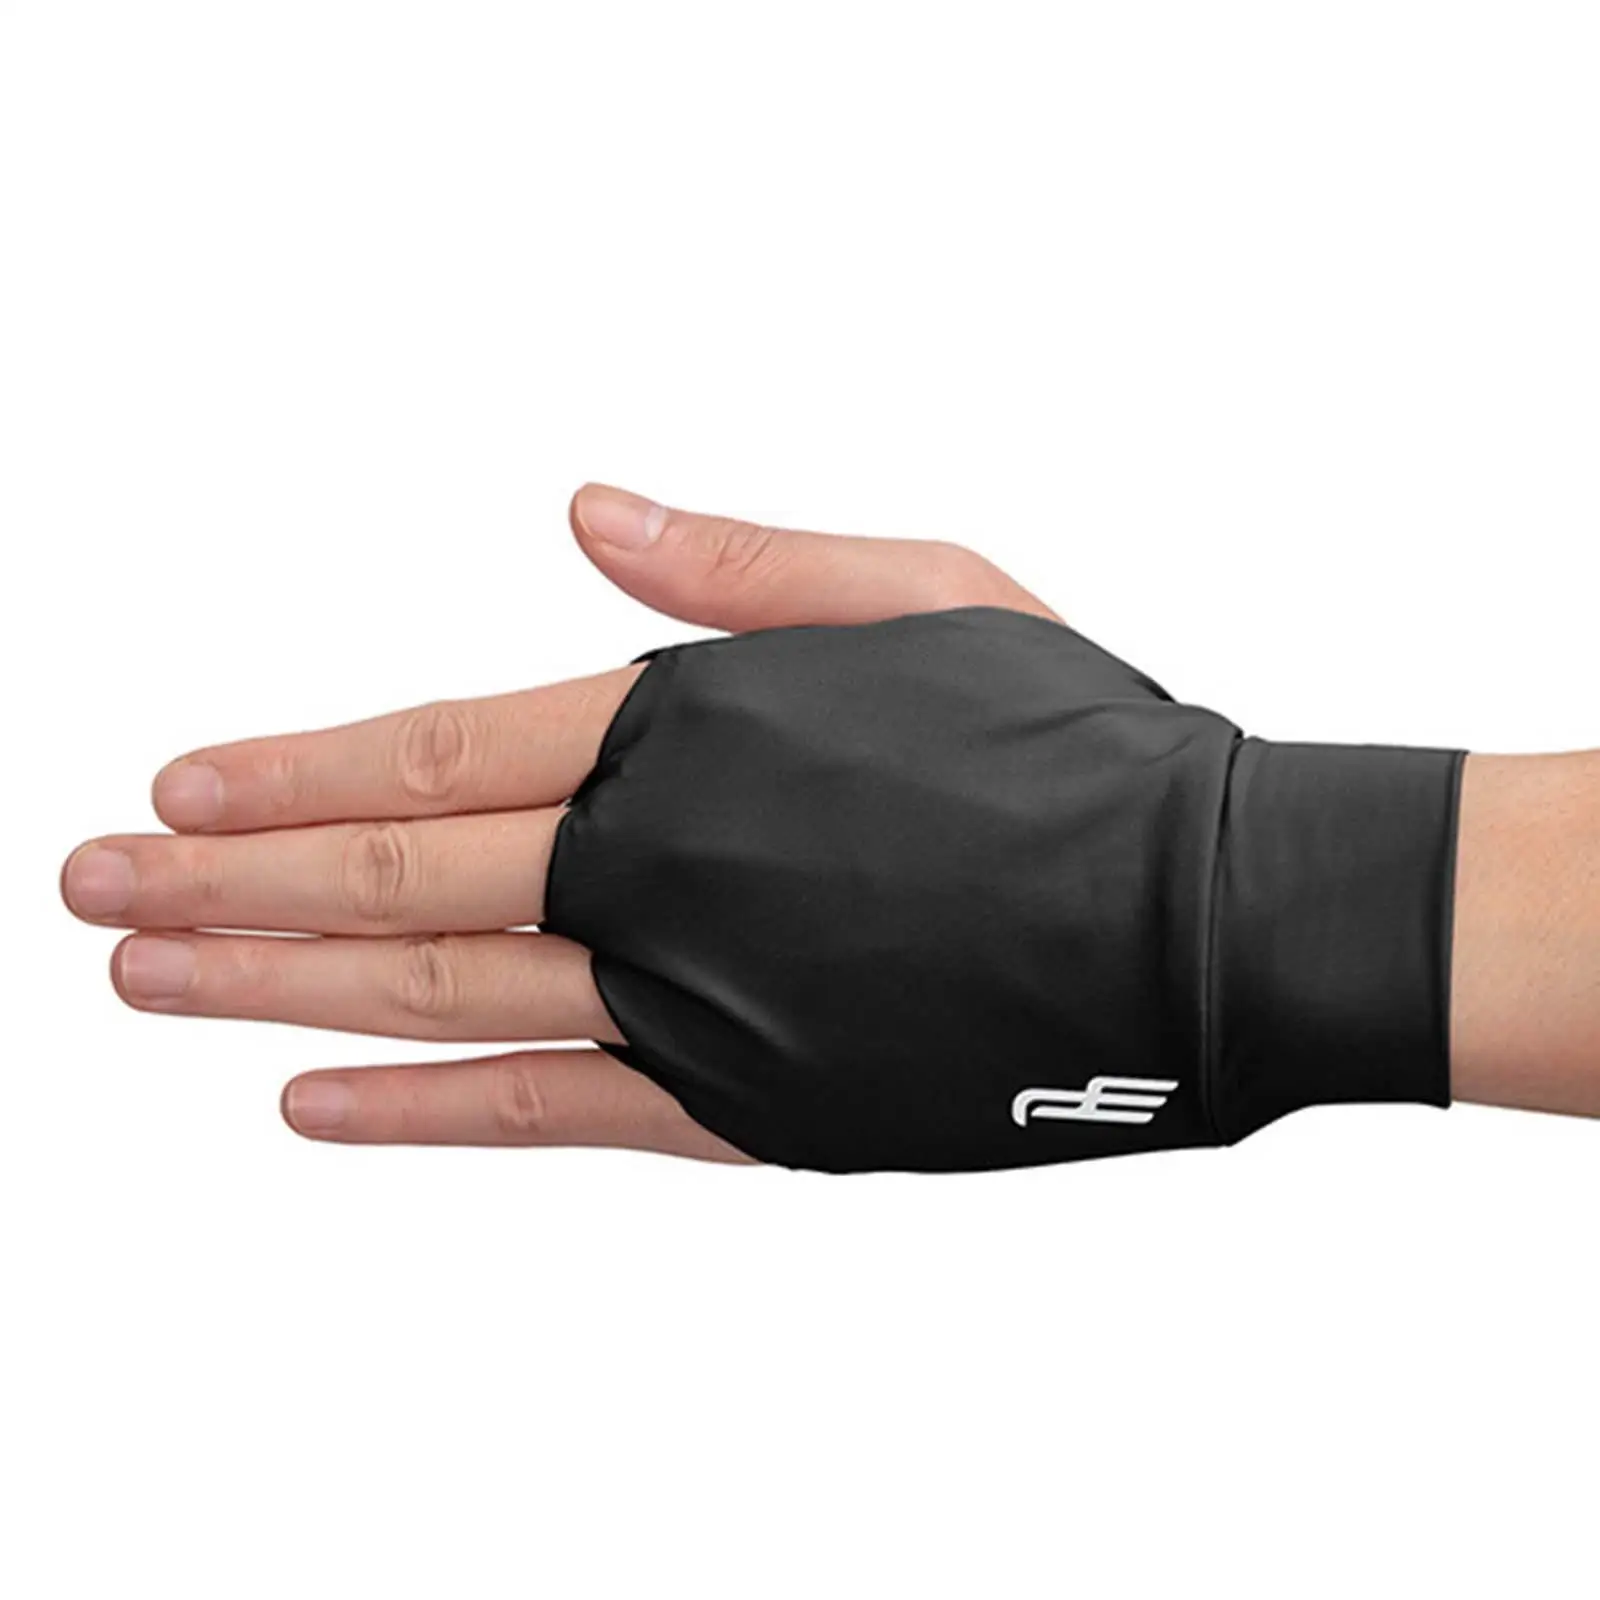 Golf Half Finger Glove Ice Silk Fabric Comfortable Anti Pilling Durable for Men Women Accessories Elastic Skin Friendly Soft